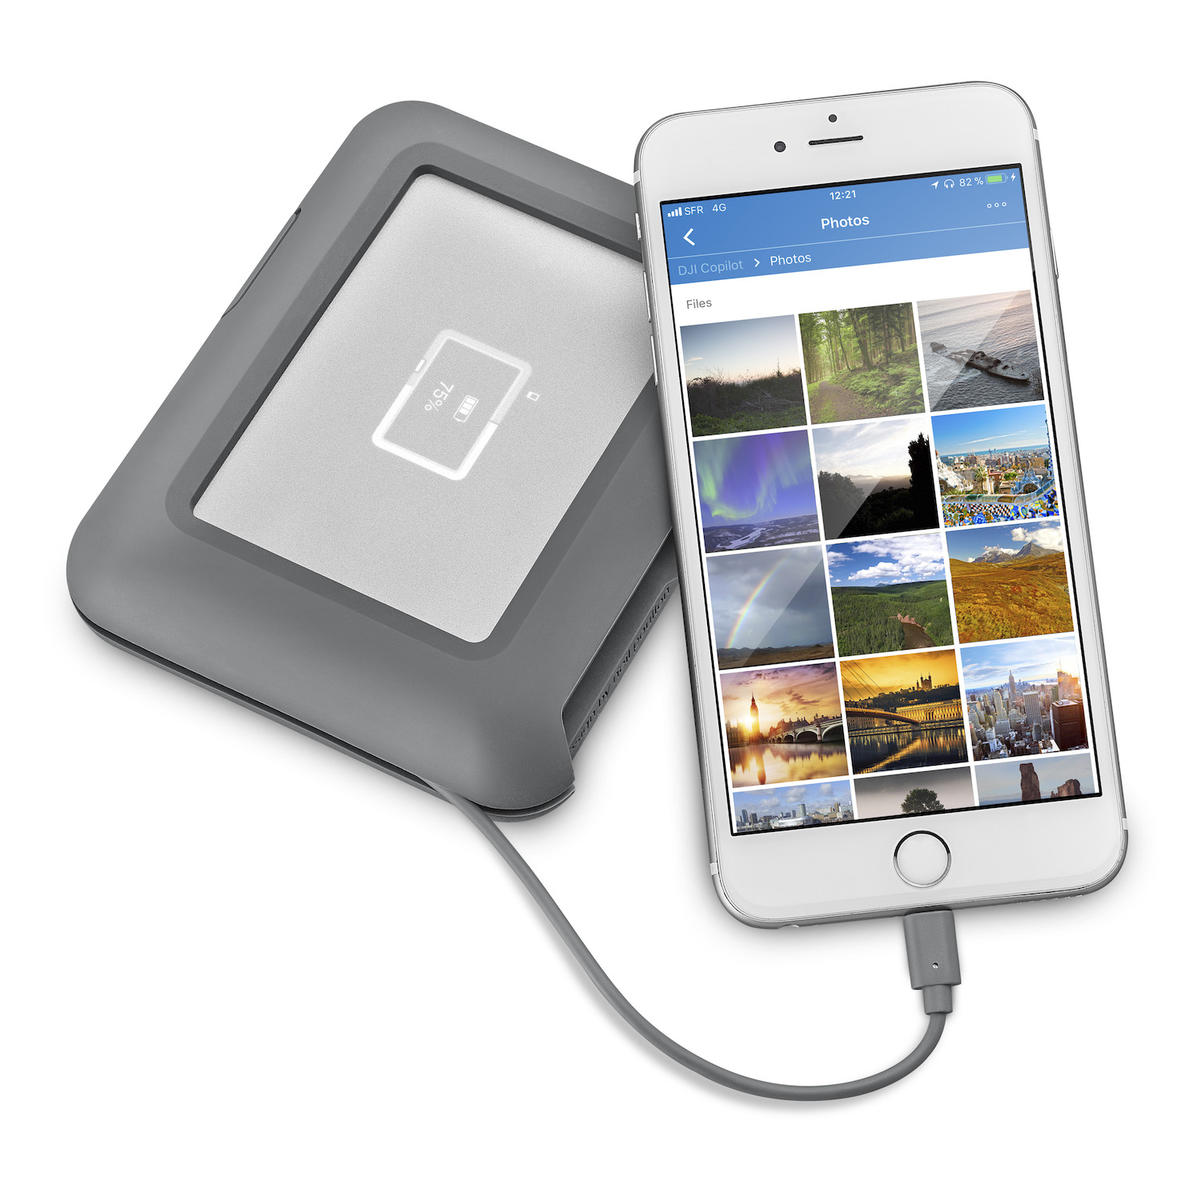 LaCie DJI Copilot, un disco duro externo para tu iPhone o iPad